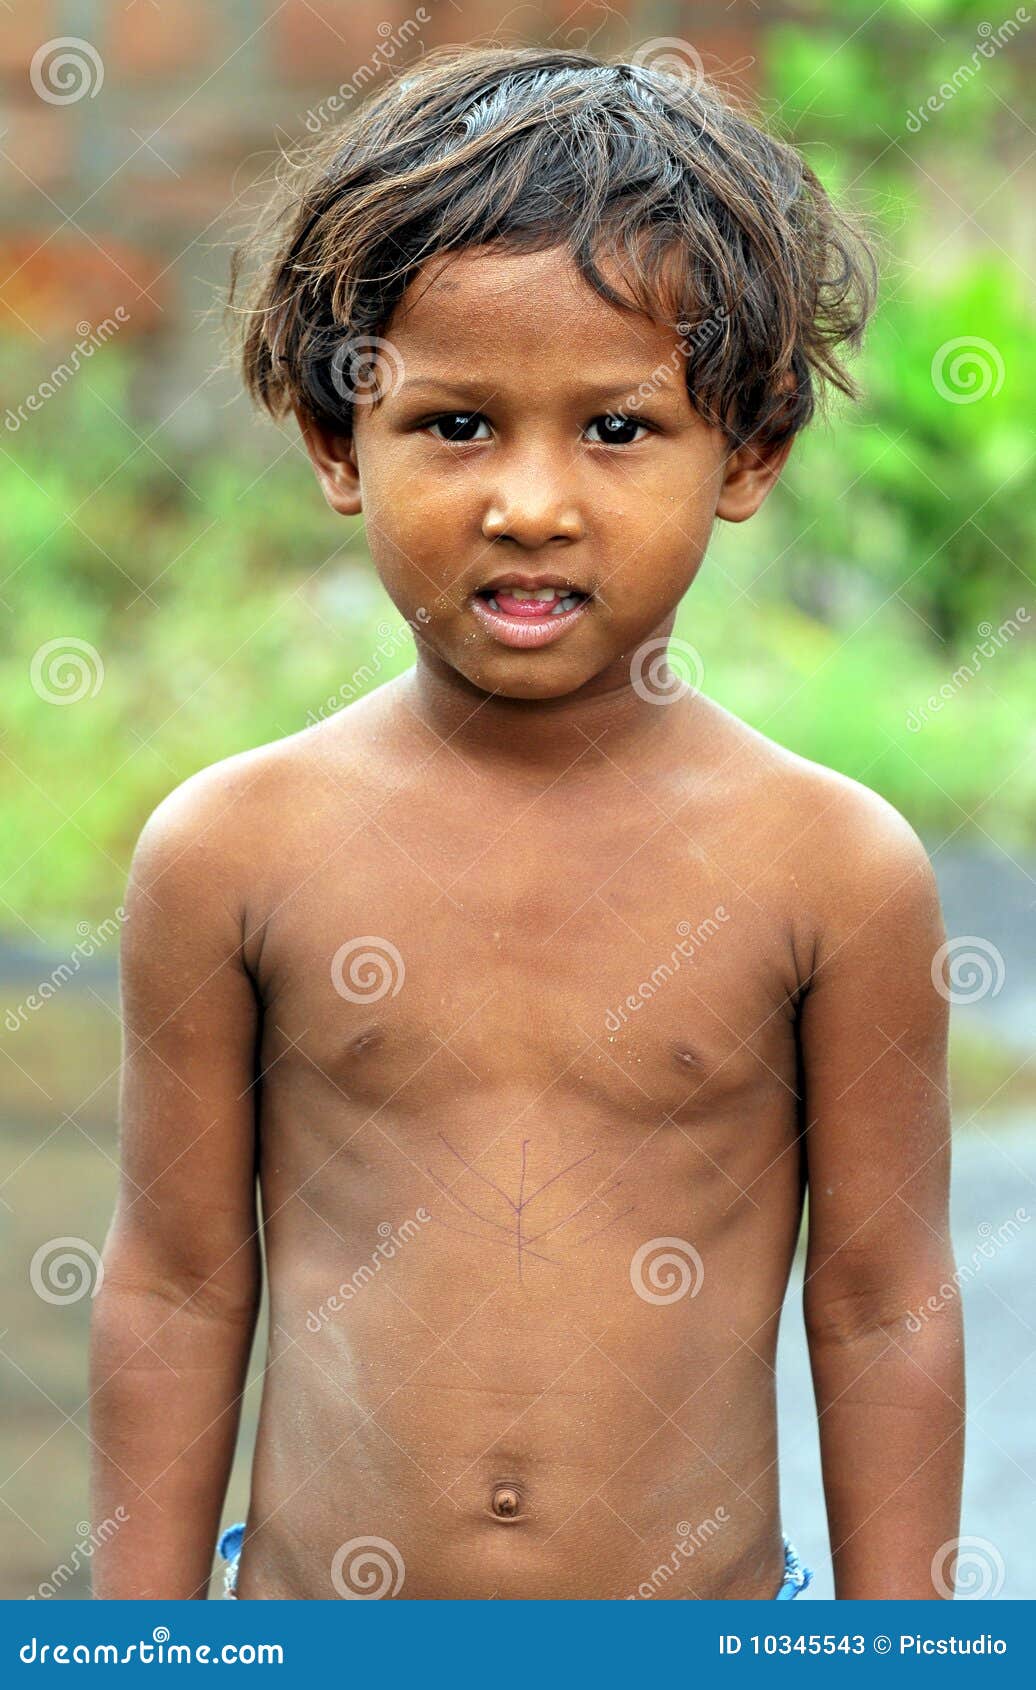 Naked toddler indian girl